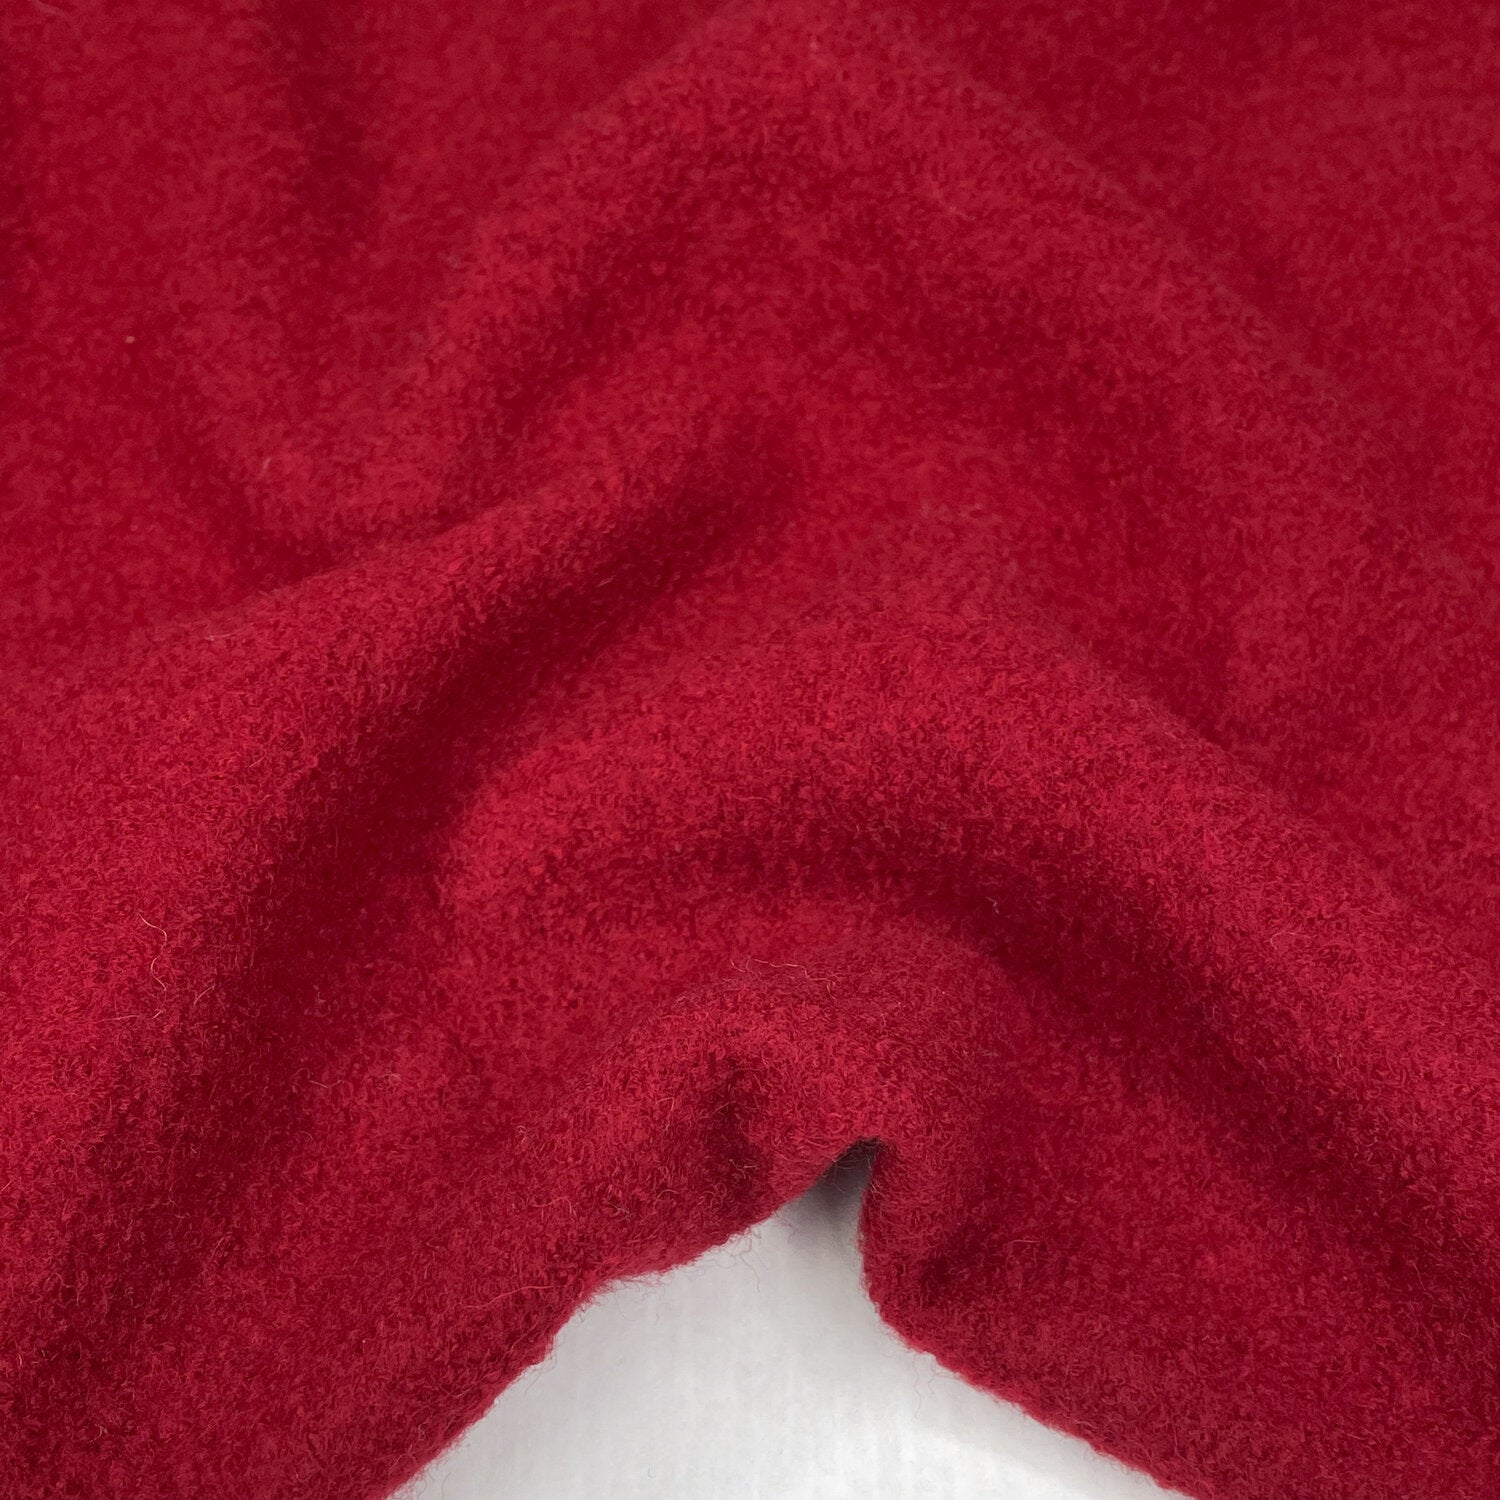 97% Organic Merino Wool/3% Spandex Interlock Blend Fabric - Feltable